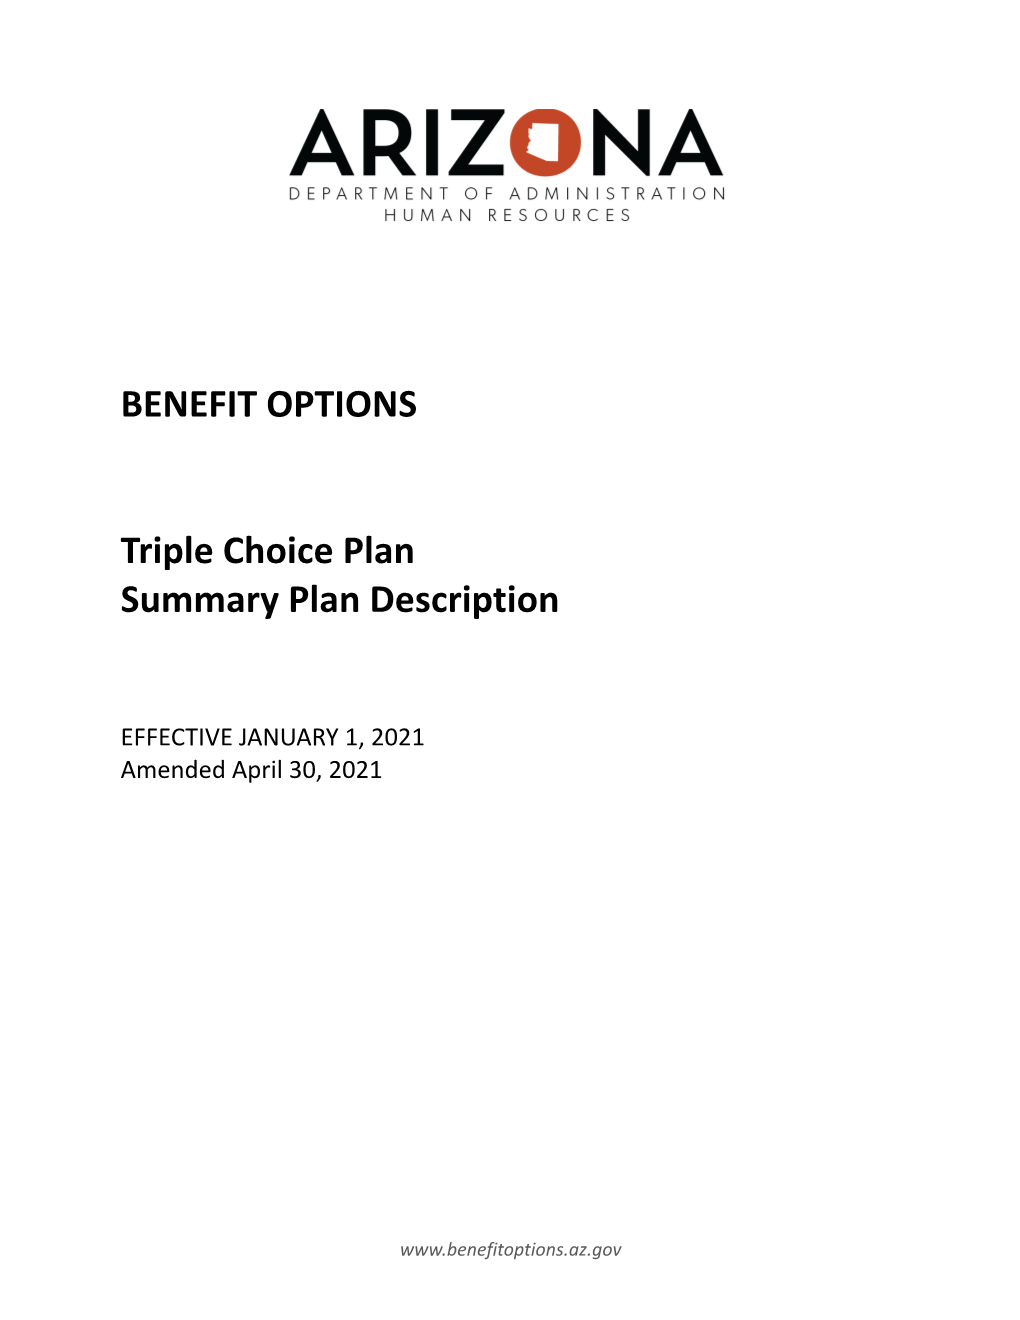 Triple Choice Plan Summary Plan Description